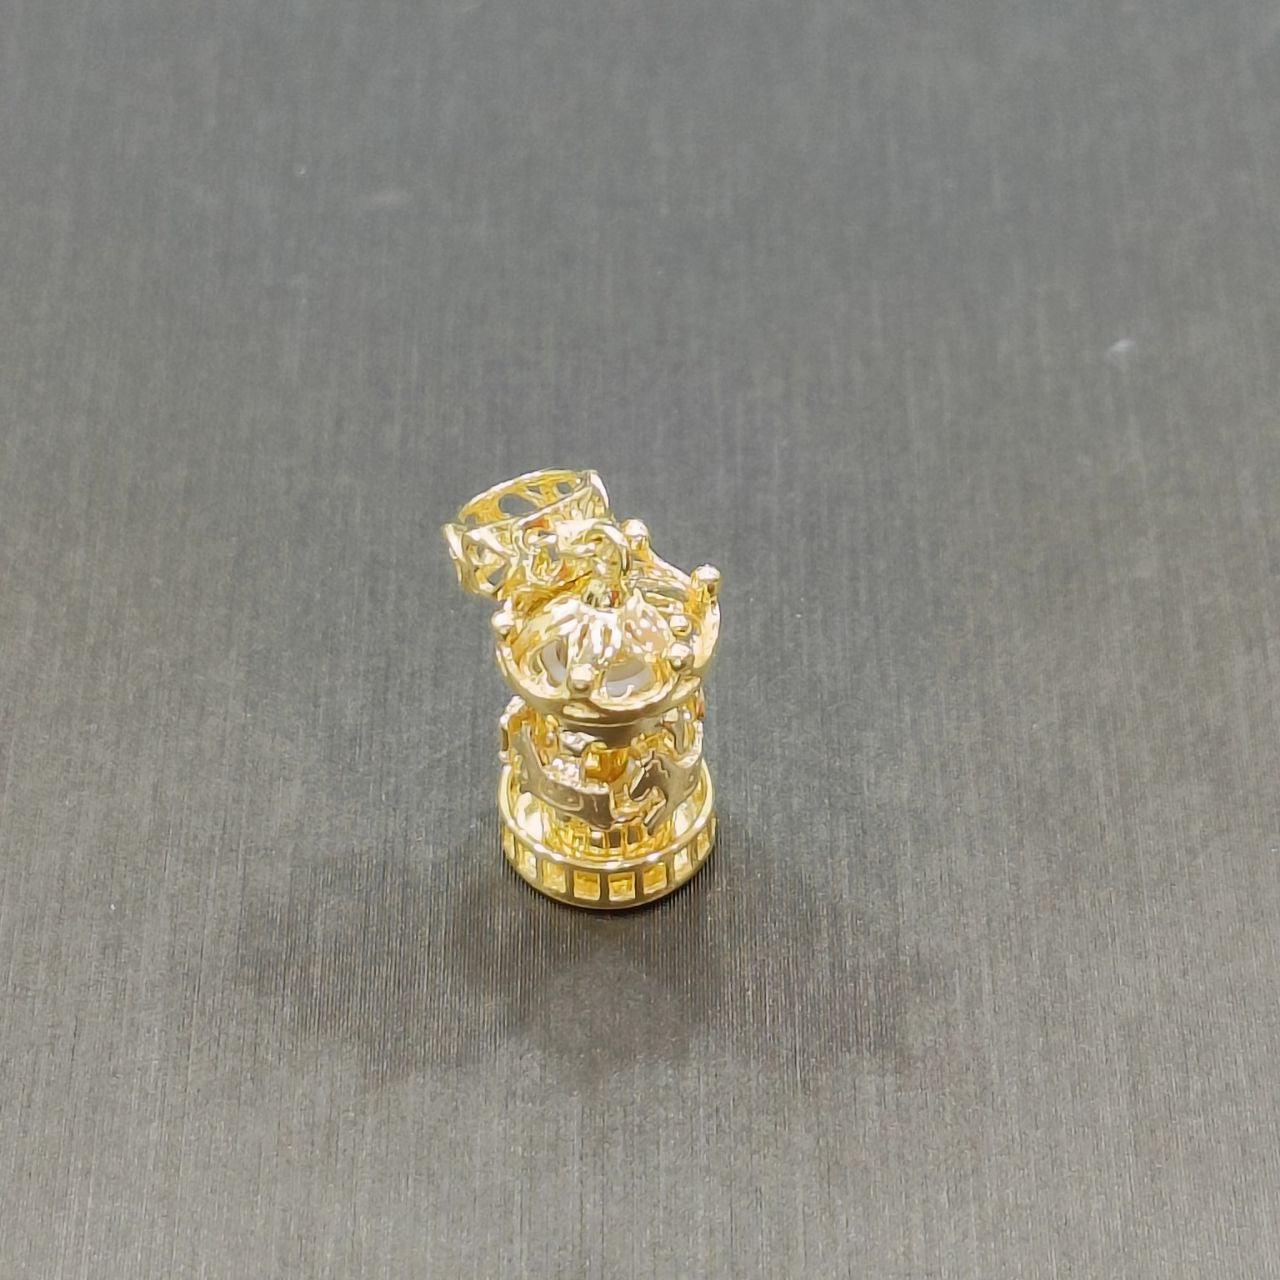 22k / 916 Gold Carousell Charm / Pendant-916 gold-Best Gold Shop